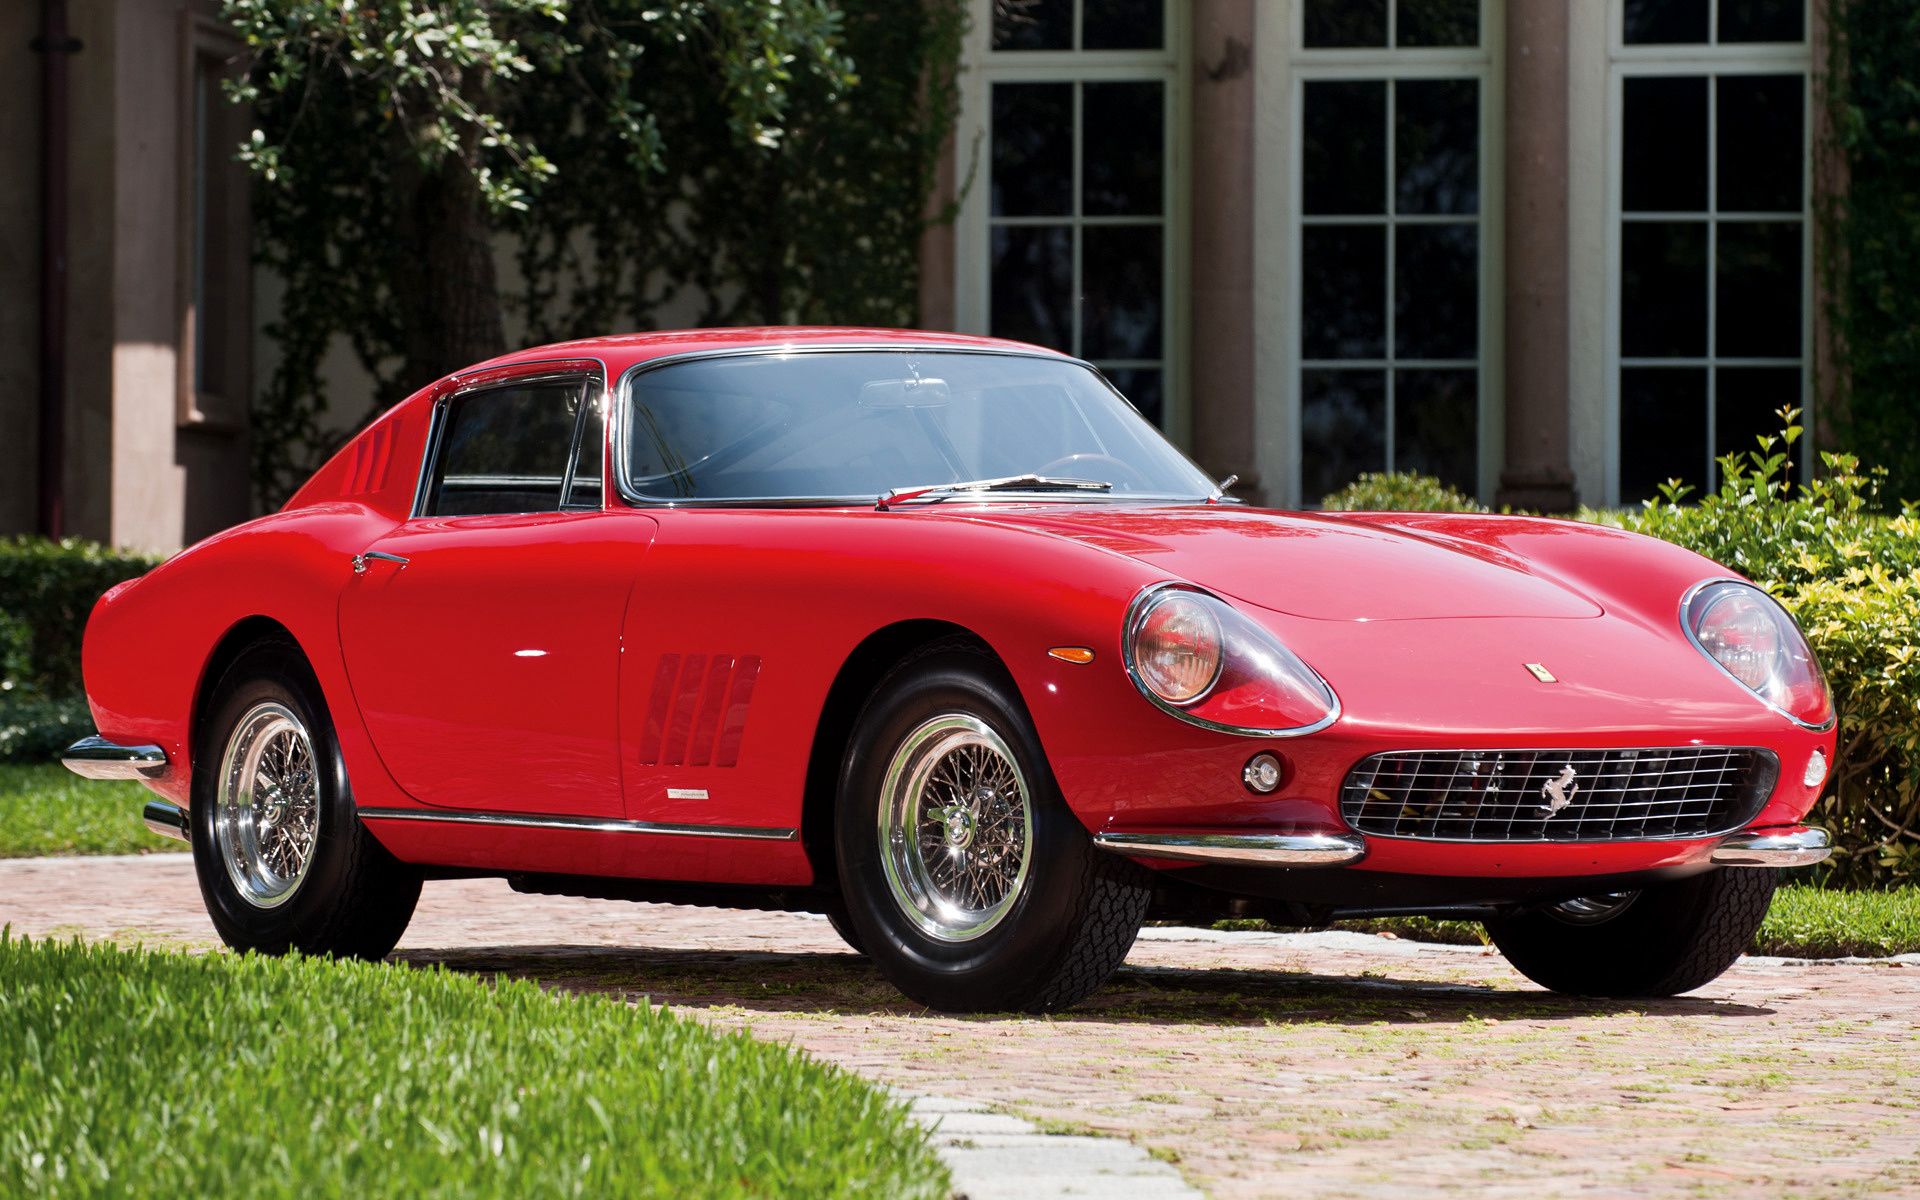 The 1964 Ferrari 275 GTB on display for sale.